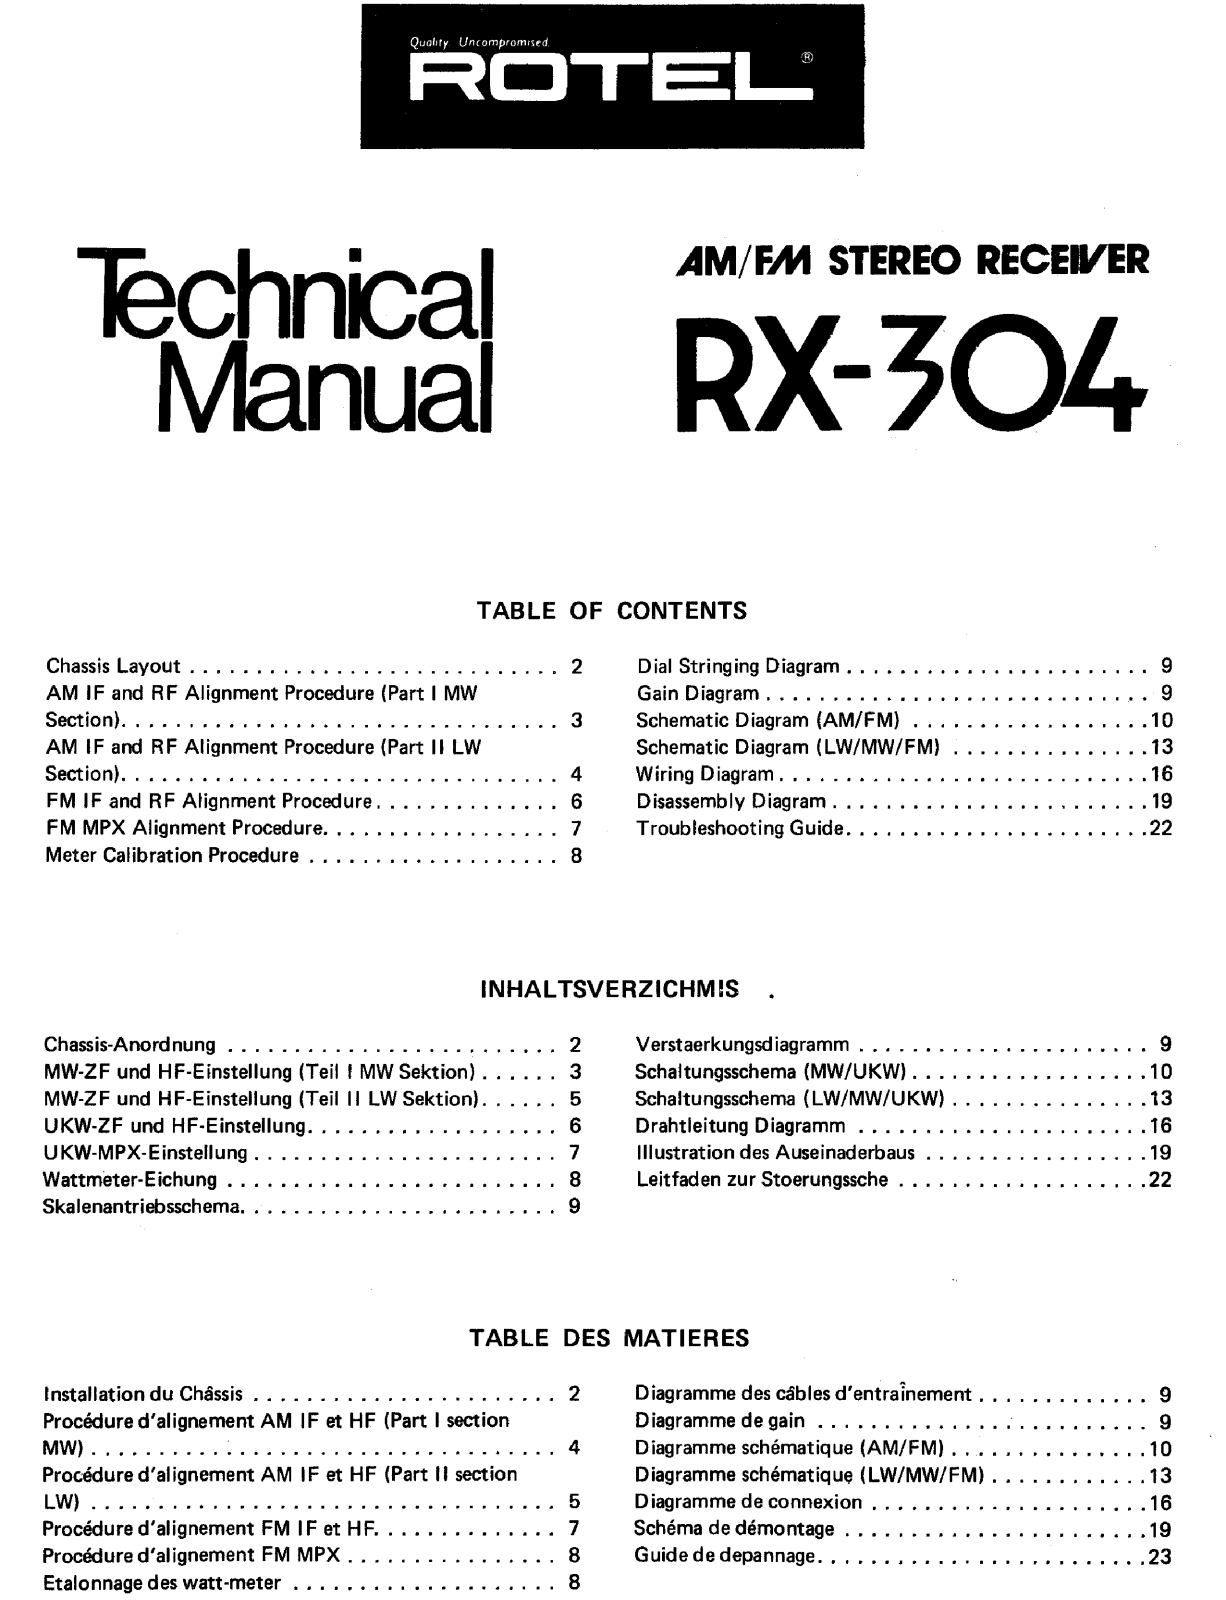 Rotel RX-304 Service manual